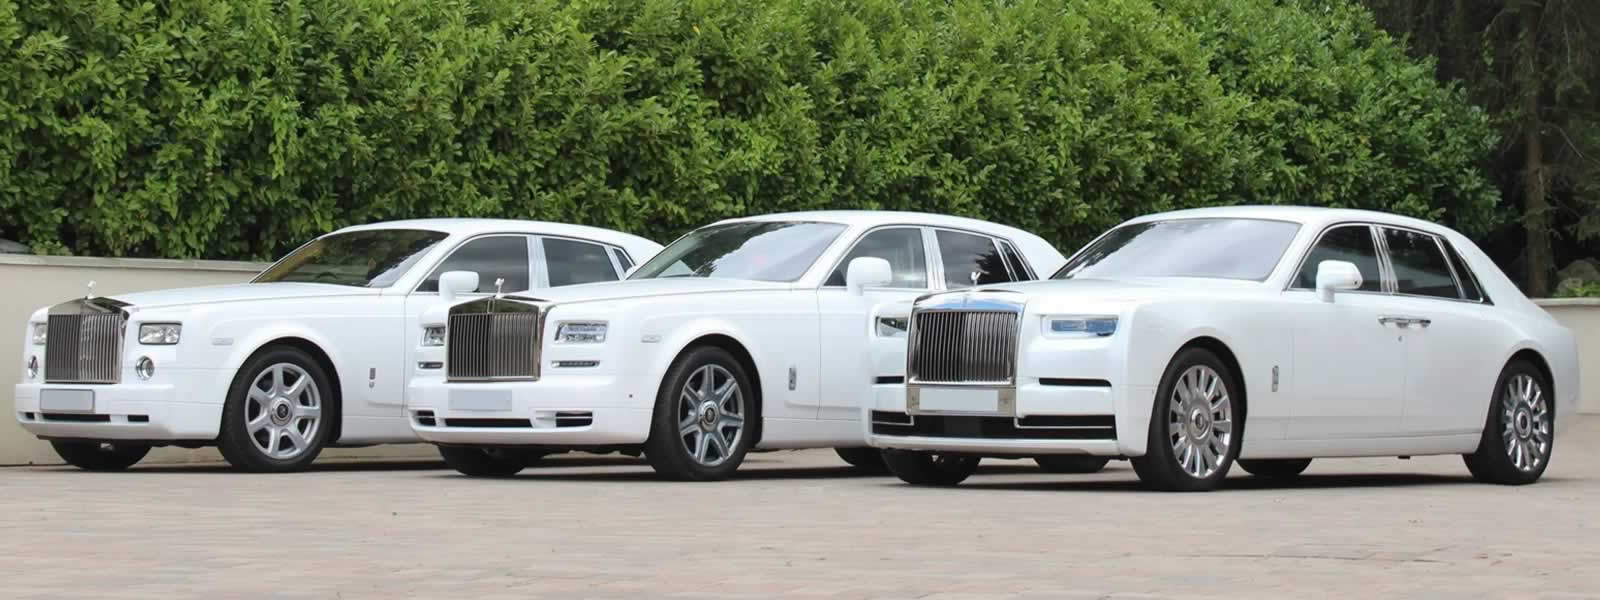 3 Rolls-Royce Phantoms